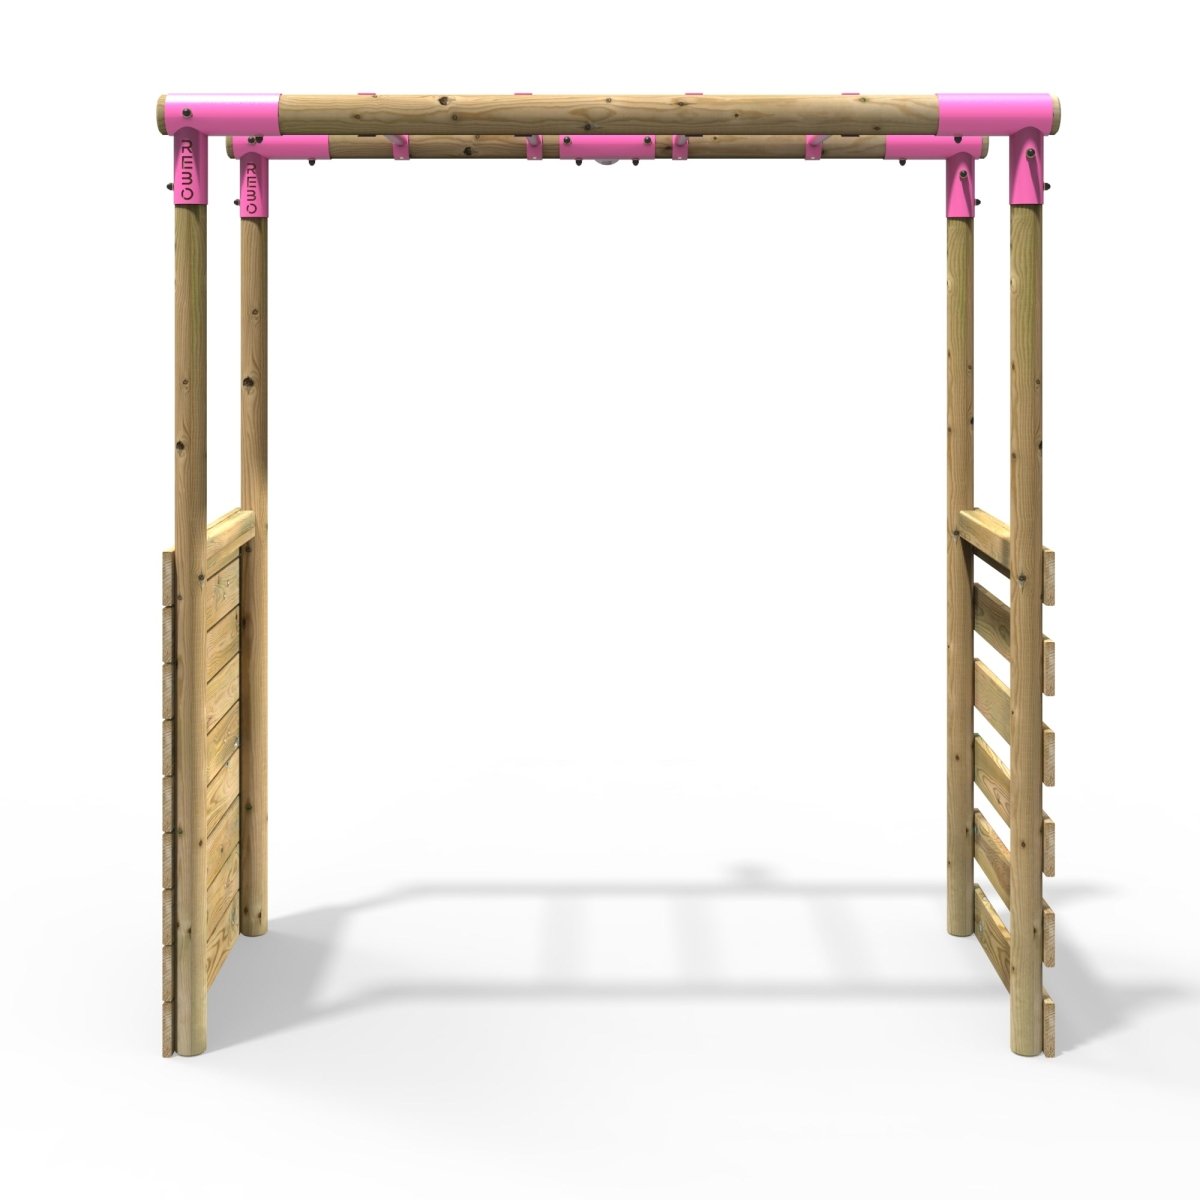 Rebo Monkey Bar Extension Kit for Round Wood Frames - Pink